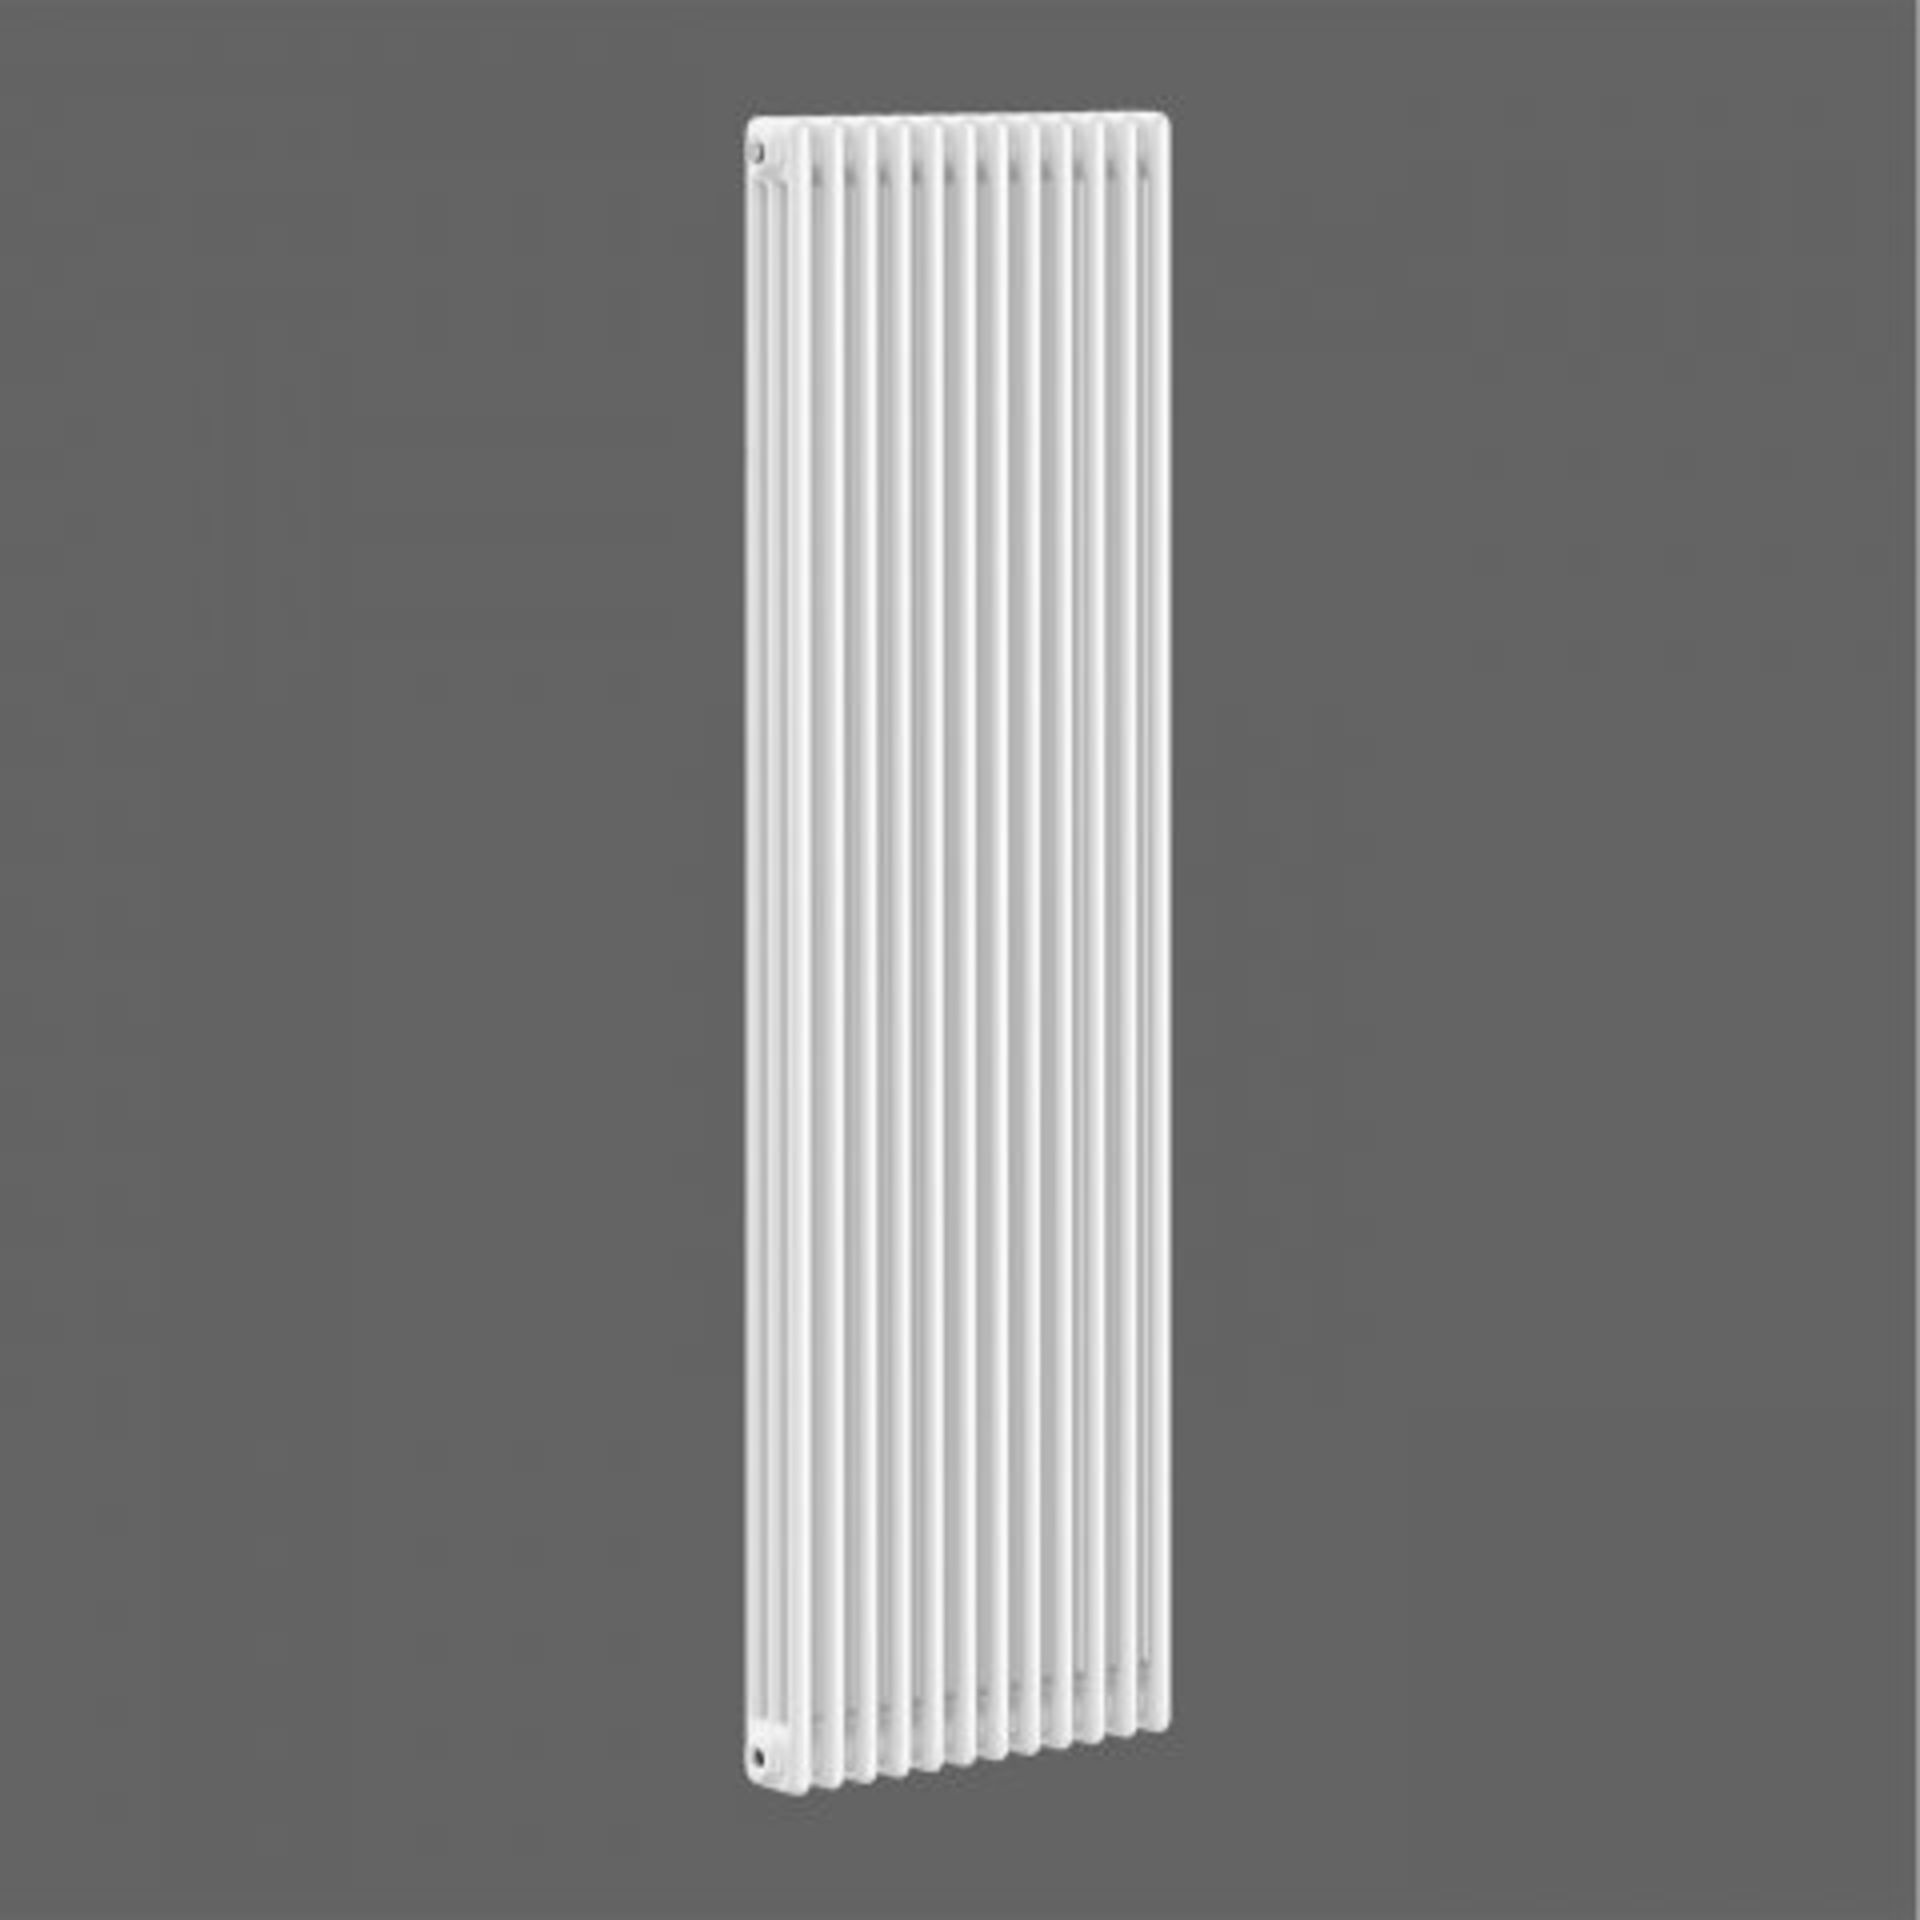 (A38) 1800x554mm White Triple Panel Vertical Colosseum Radiator - Roma Premium. RRP £499.99. Classic - Image 2 of 3